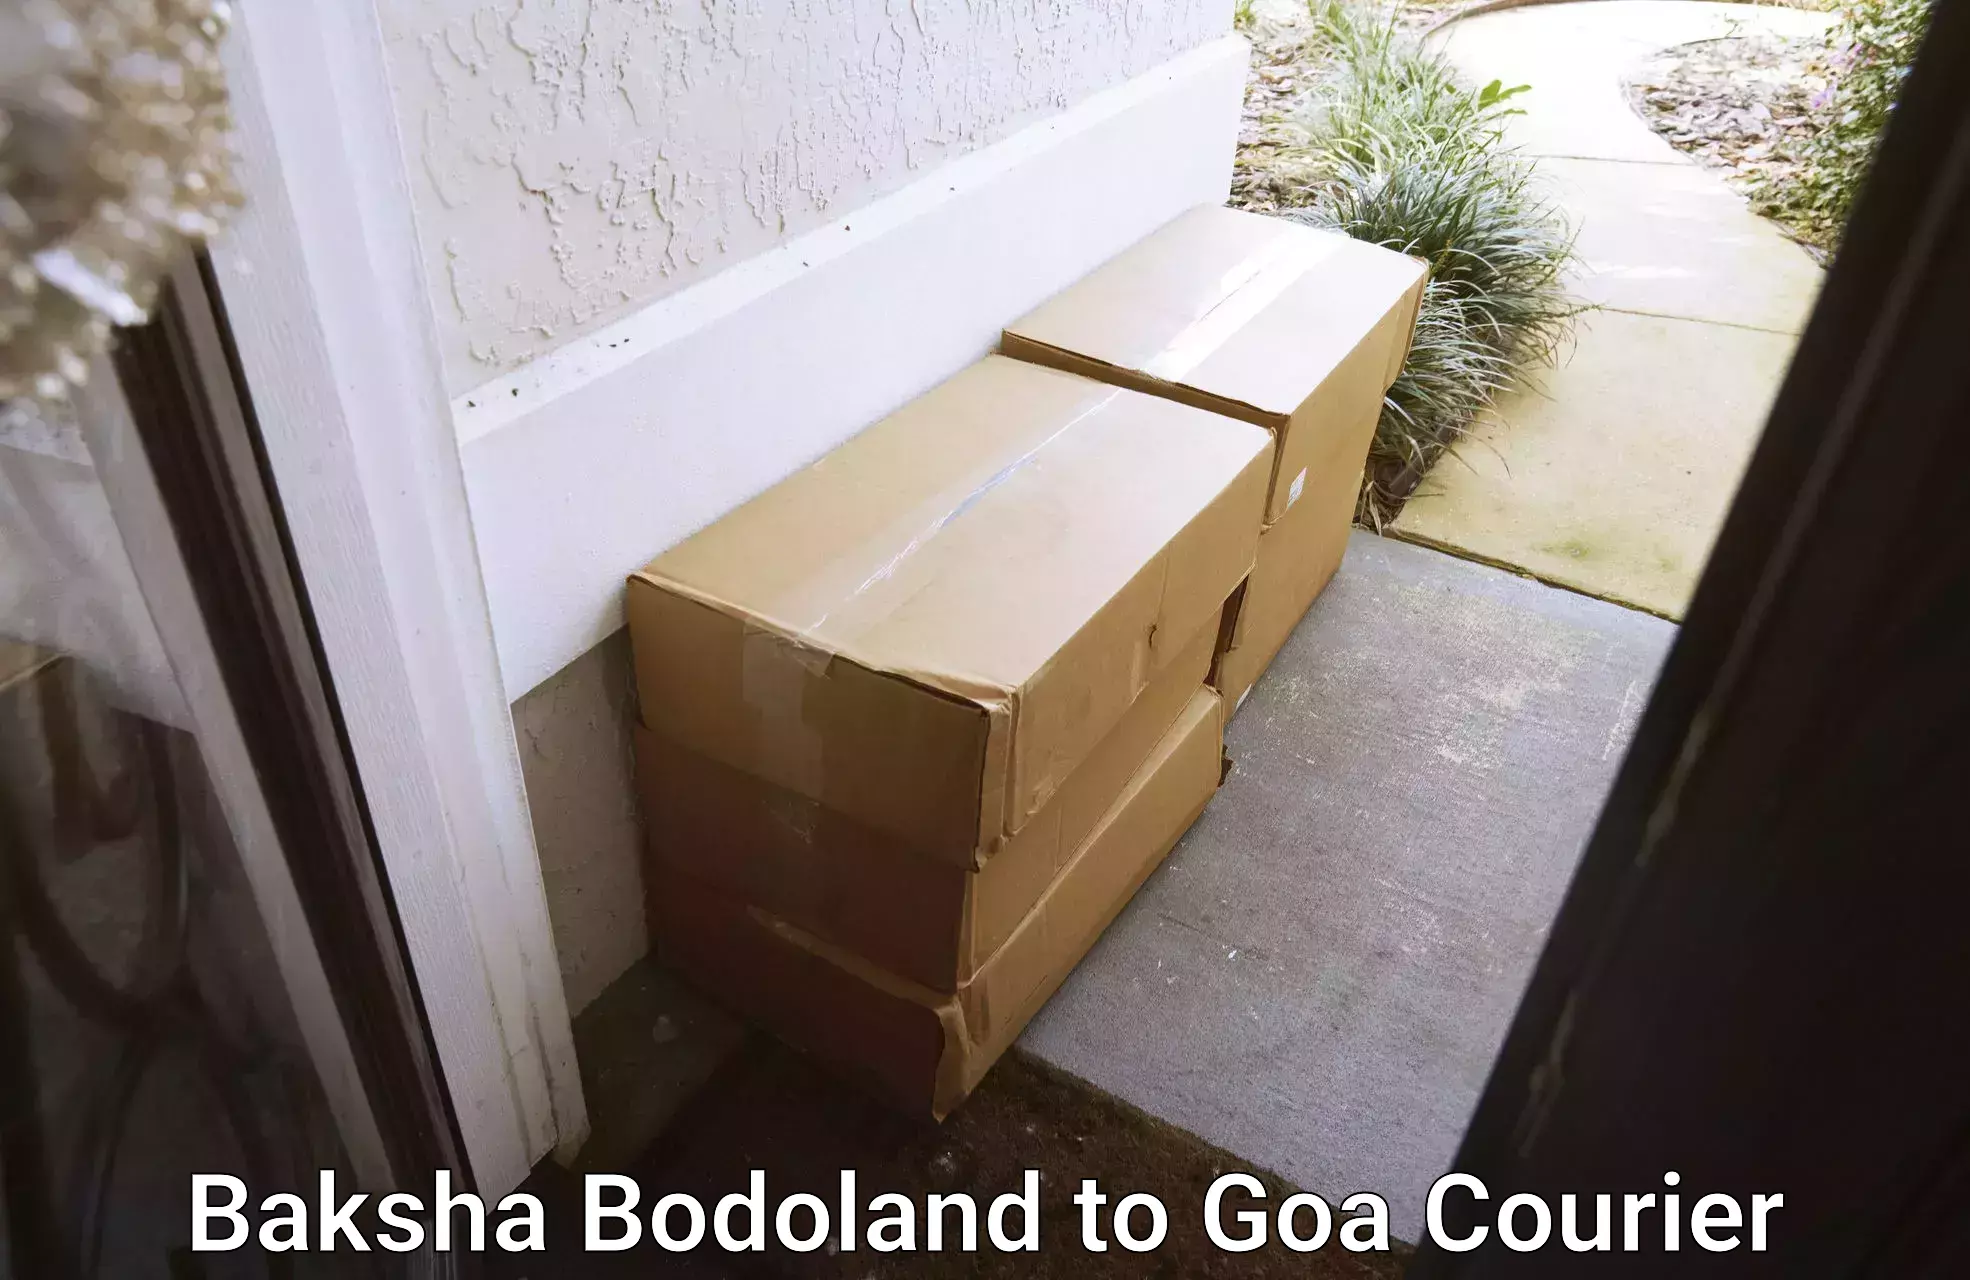 Supply chain efficiency Baksha Bodoland to Goa